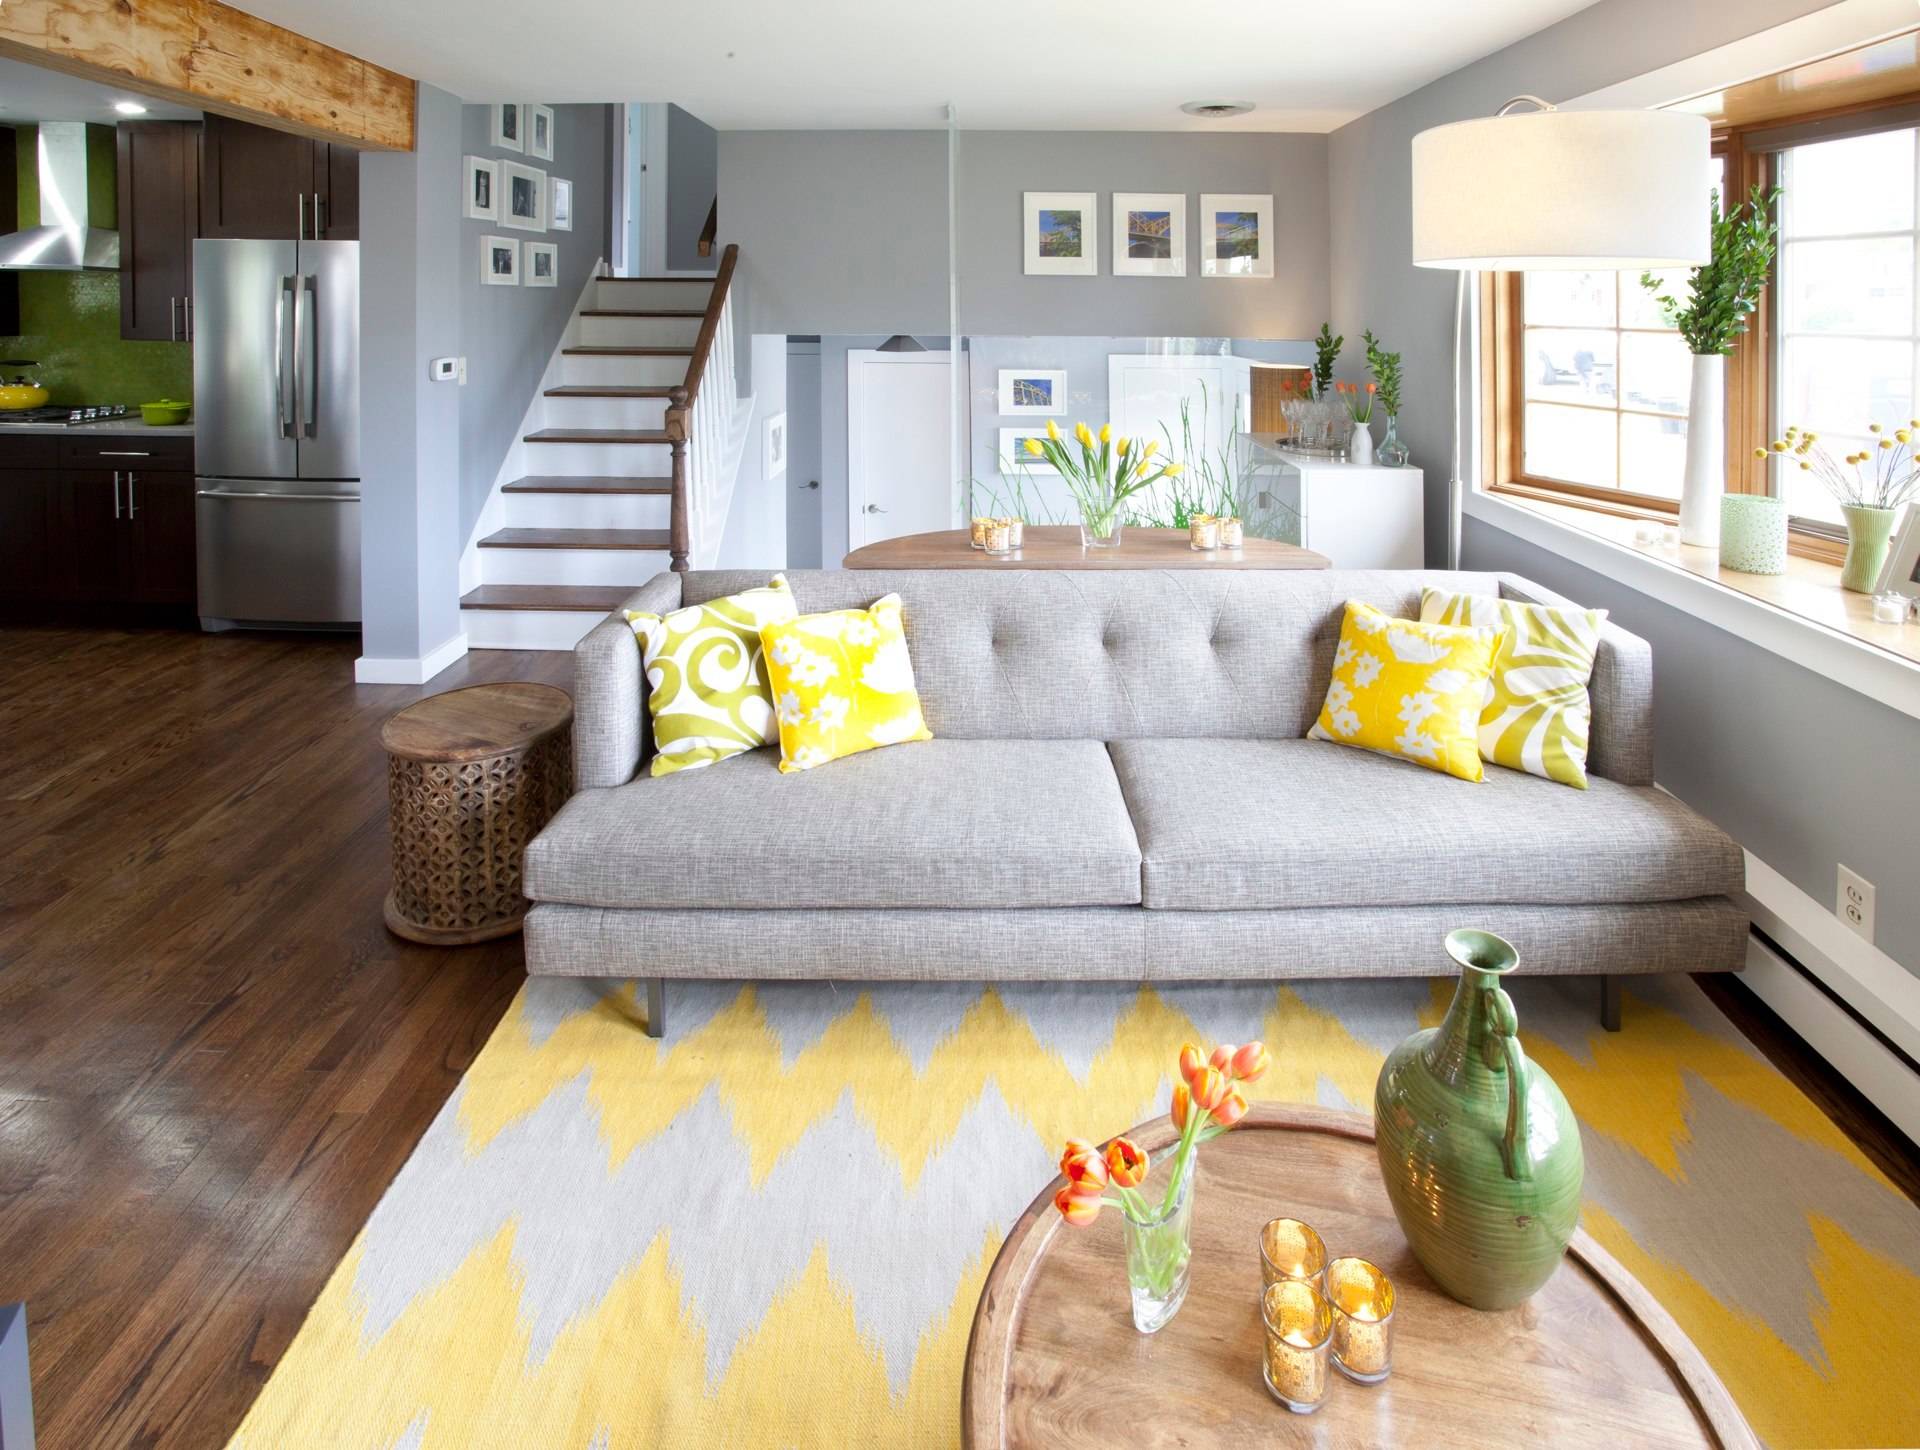 Gray Couch Yellow Pillows - Photos & Ideas | Houzz